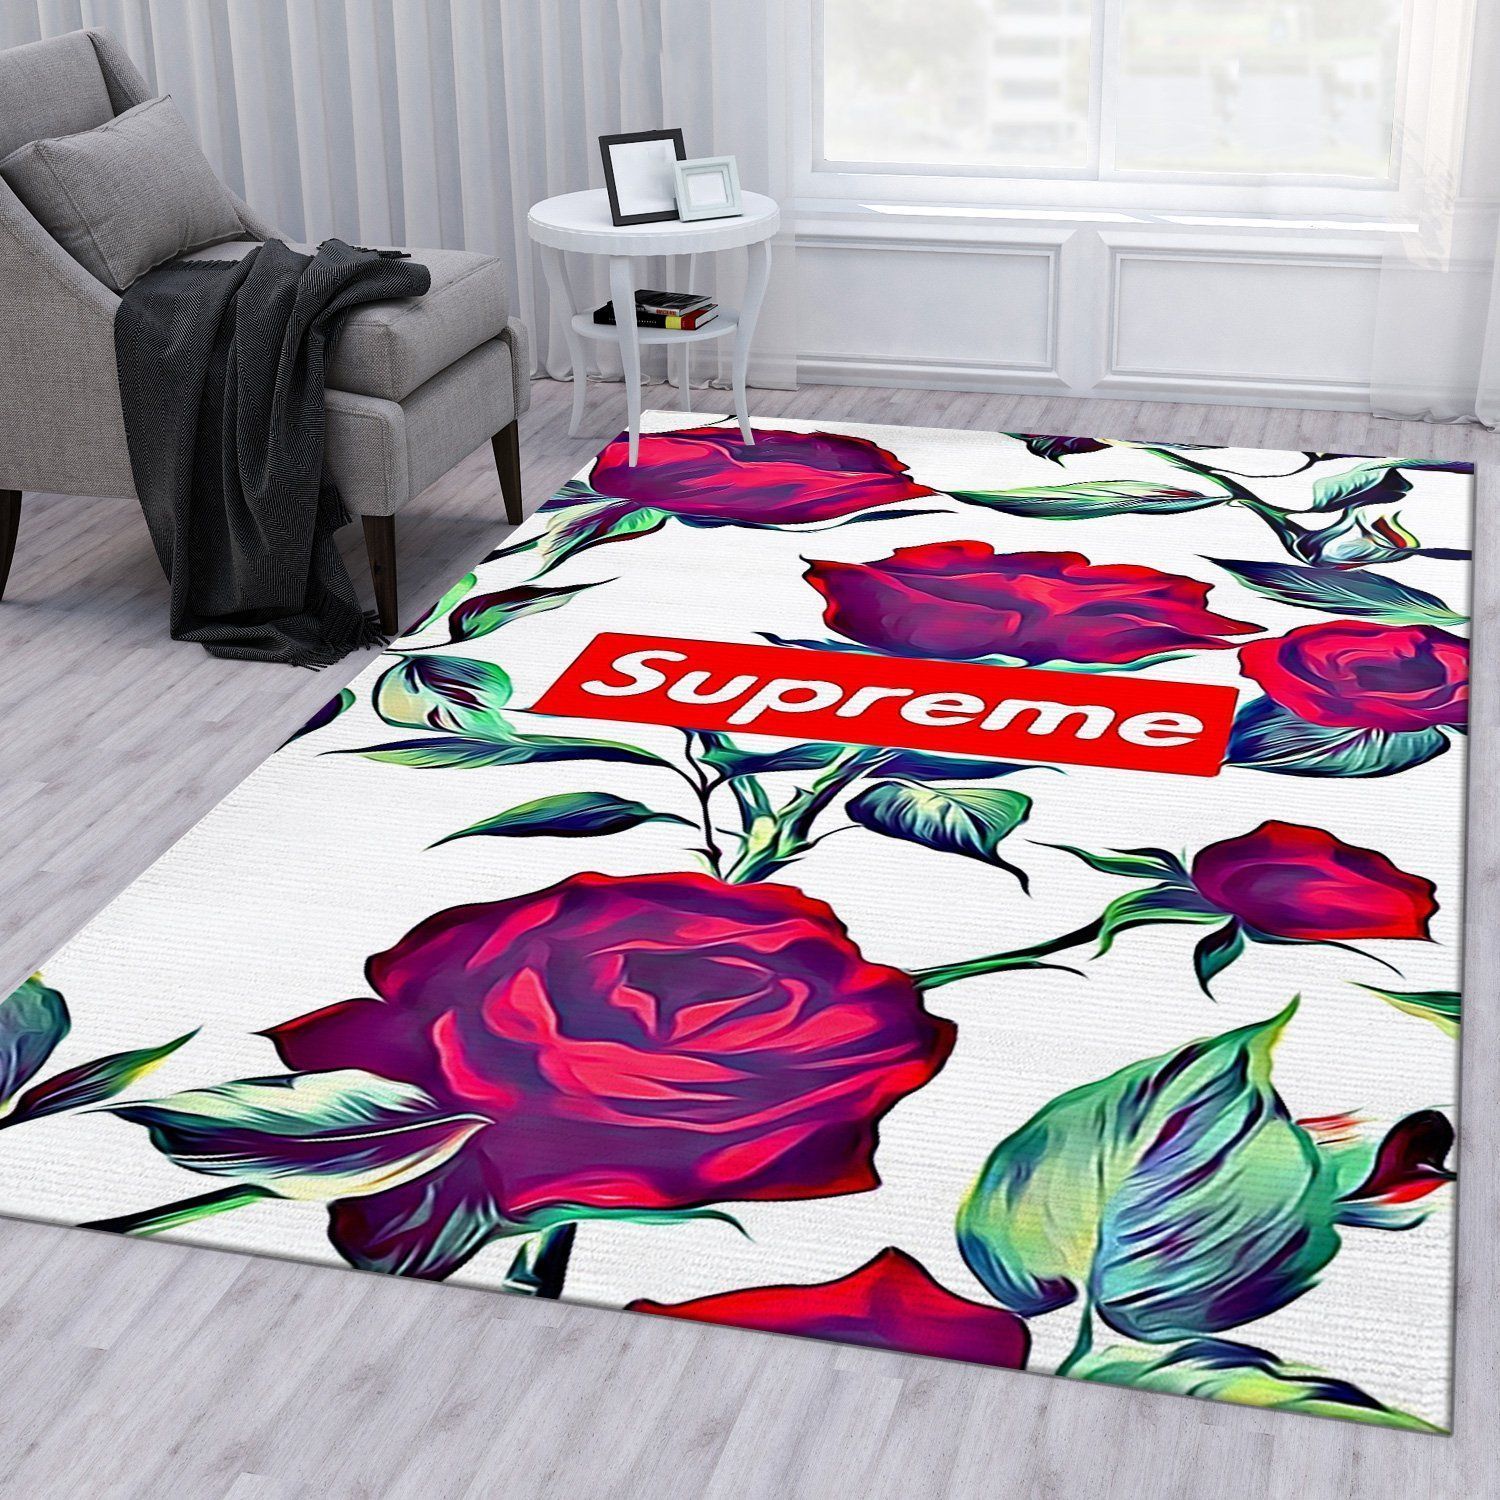 Simpson bape supreme area rugs living room carpet fn301128 christmas gift  floor decor the us decor - small ( 3 x 5 ft )